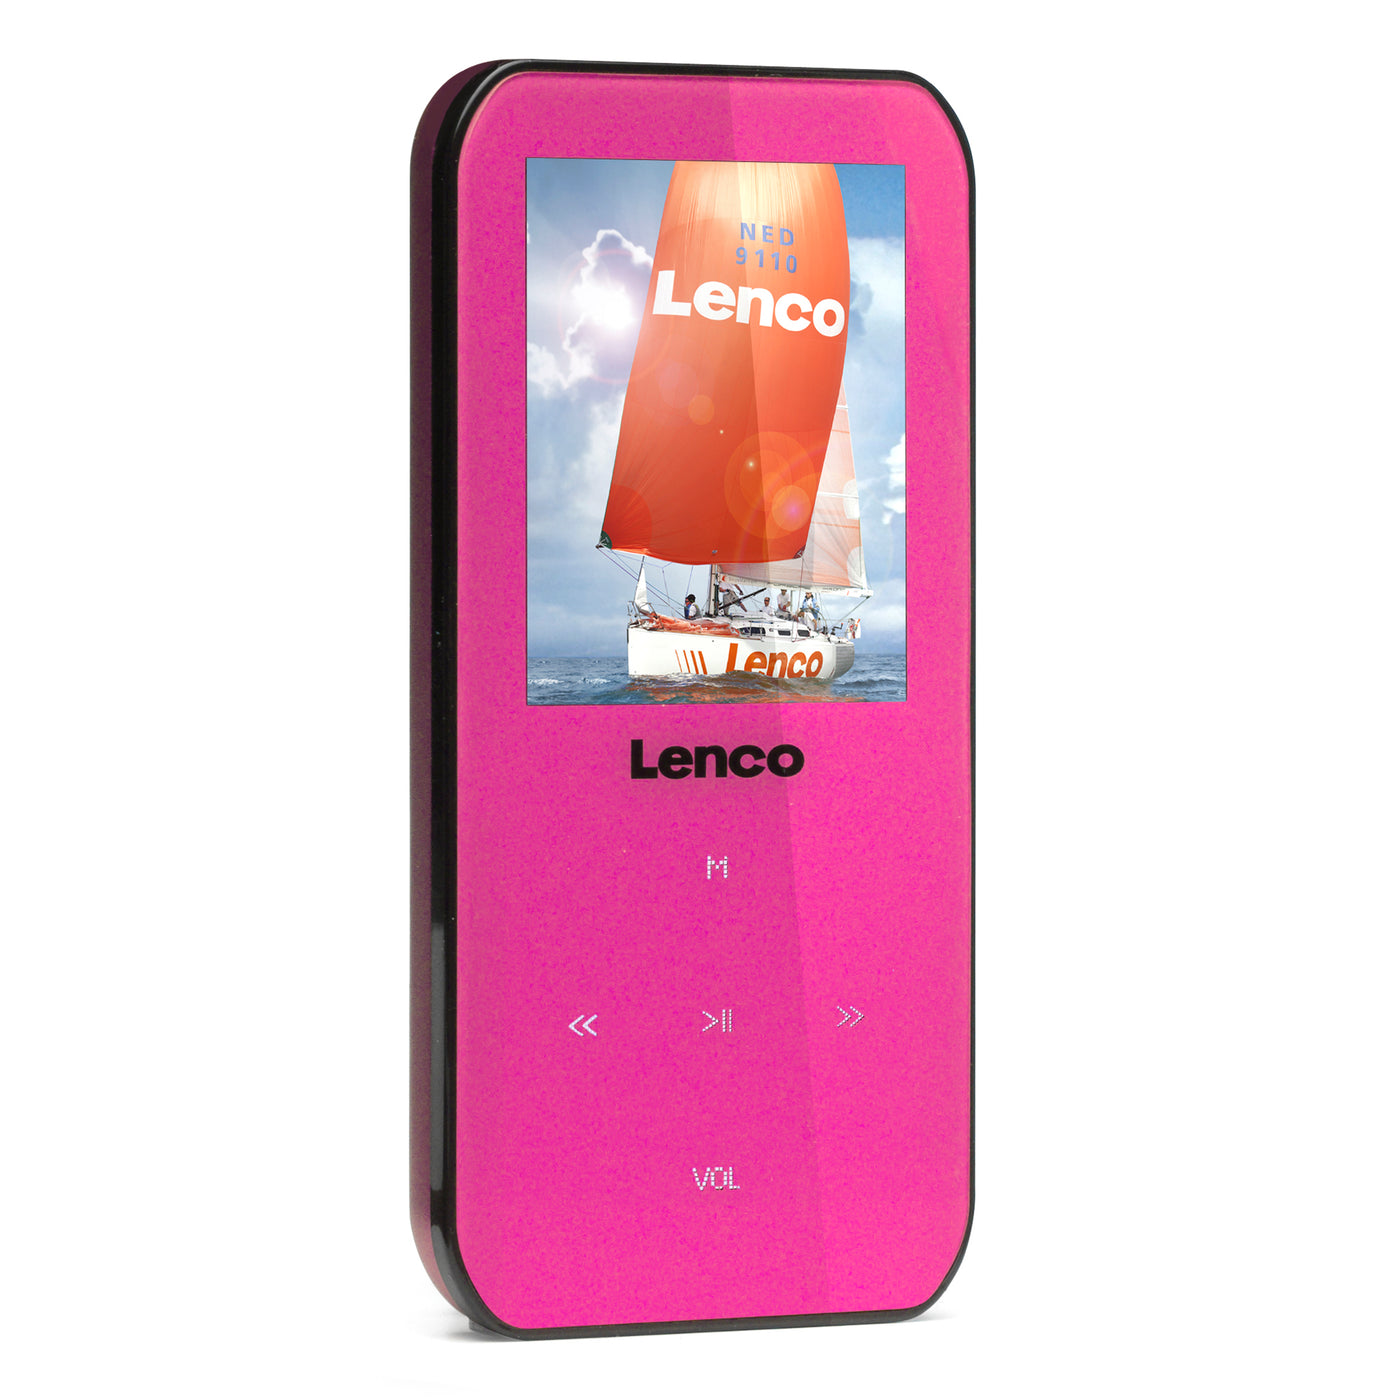 4GB Player - MP3/MP4 with Xemio-655 Pink Lenco-Catalog - – Pink LENCO memory